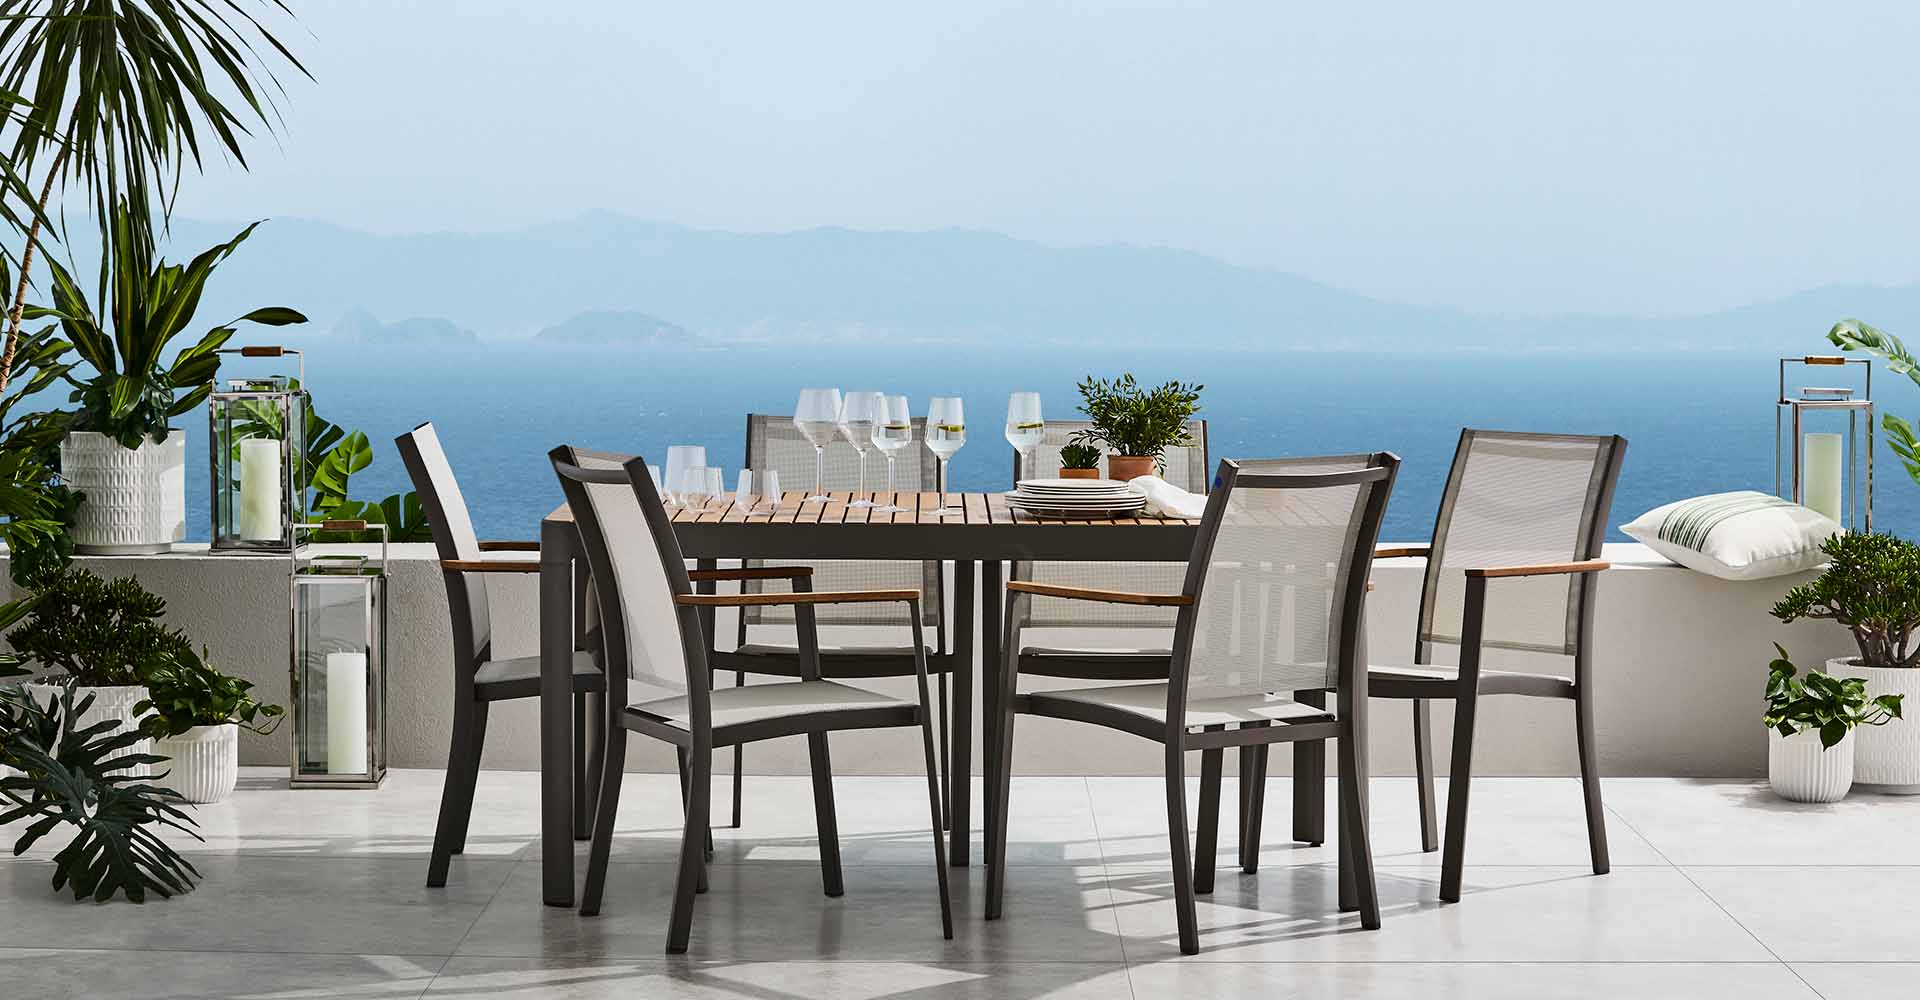 GlucksteinHome Portofino outdoor dining set